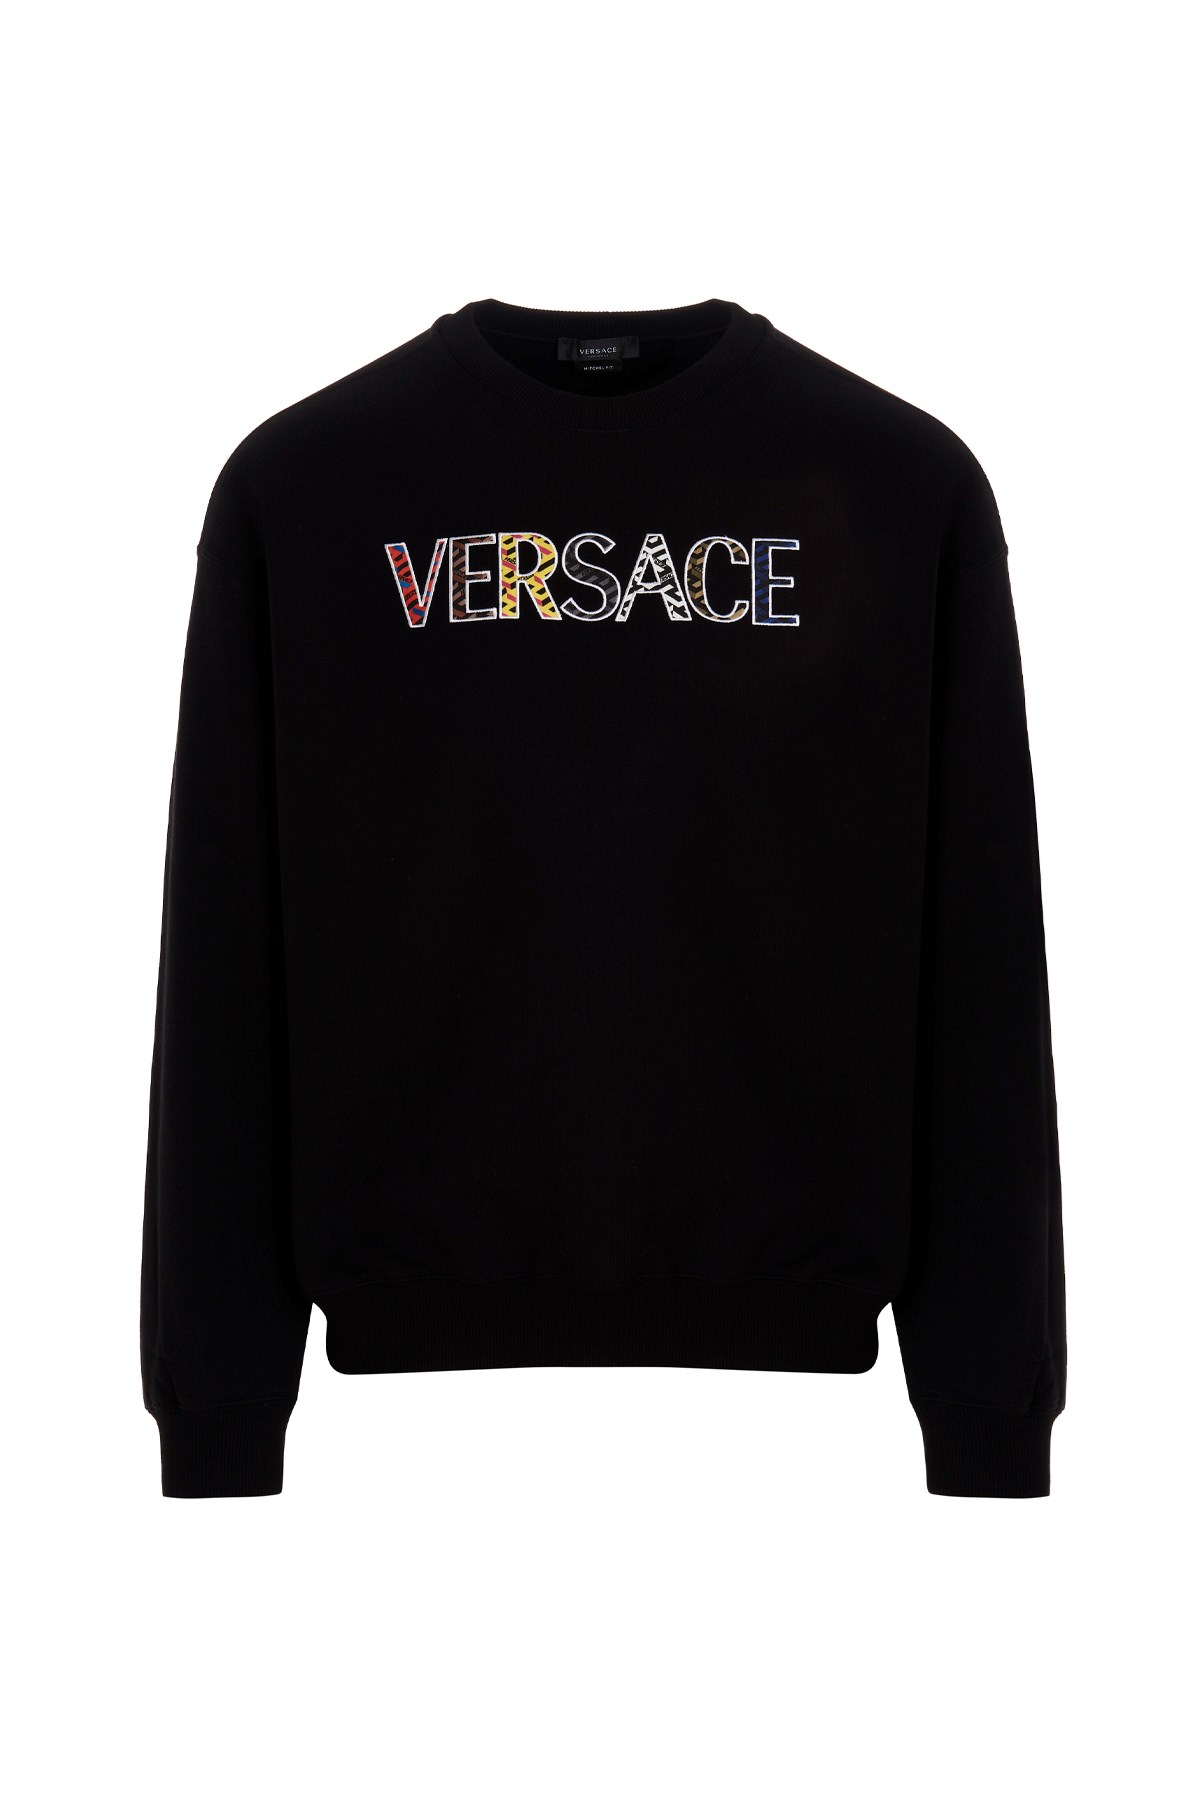 VERSACE 'Versace Cut Out Monogram’ Sweatshirt